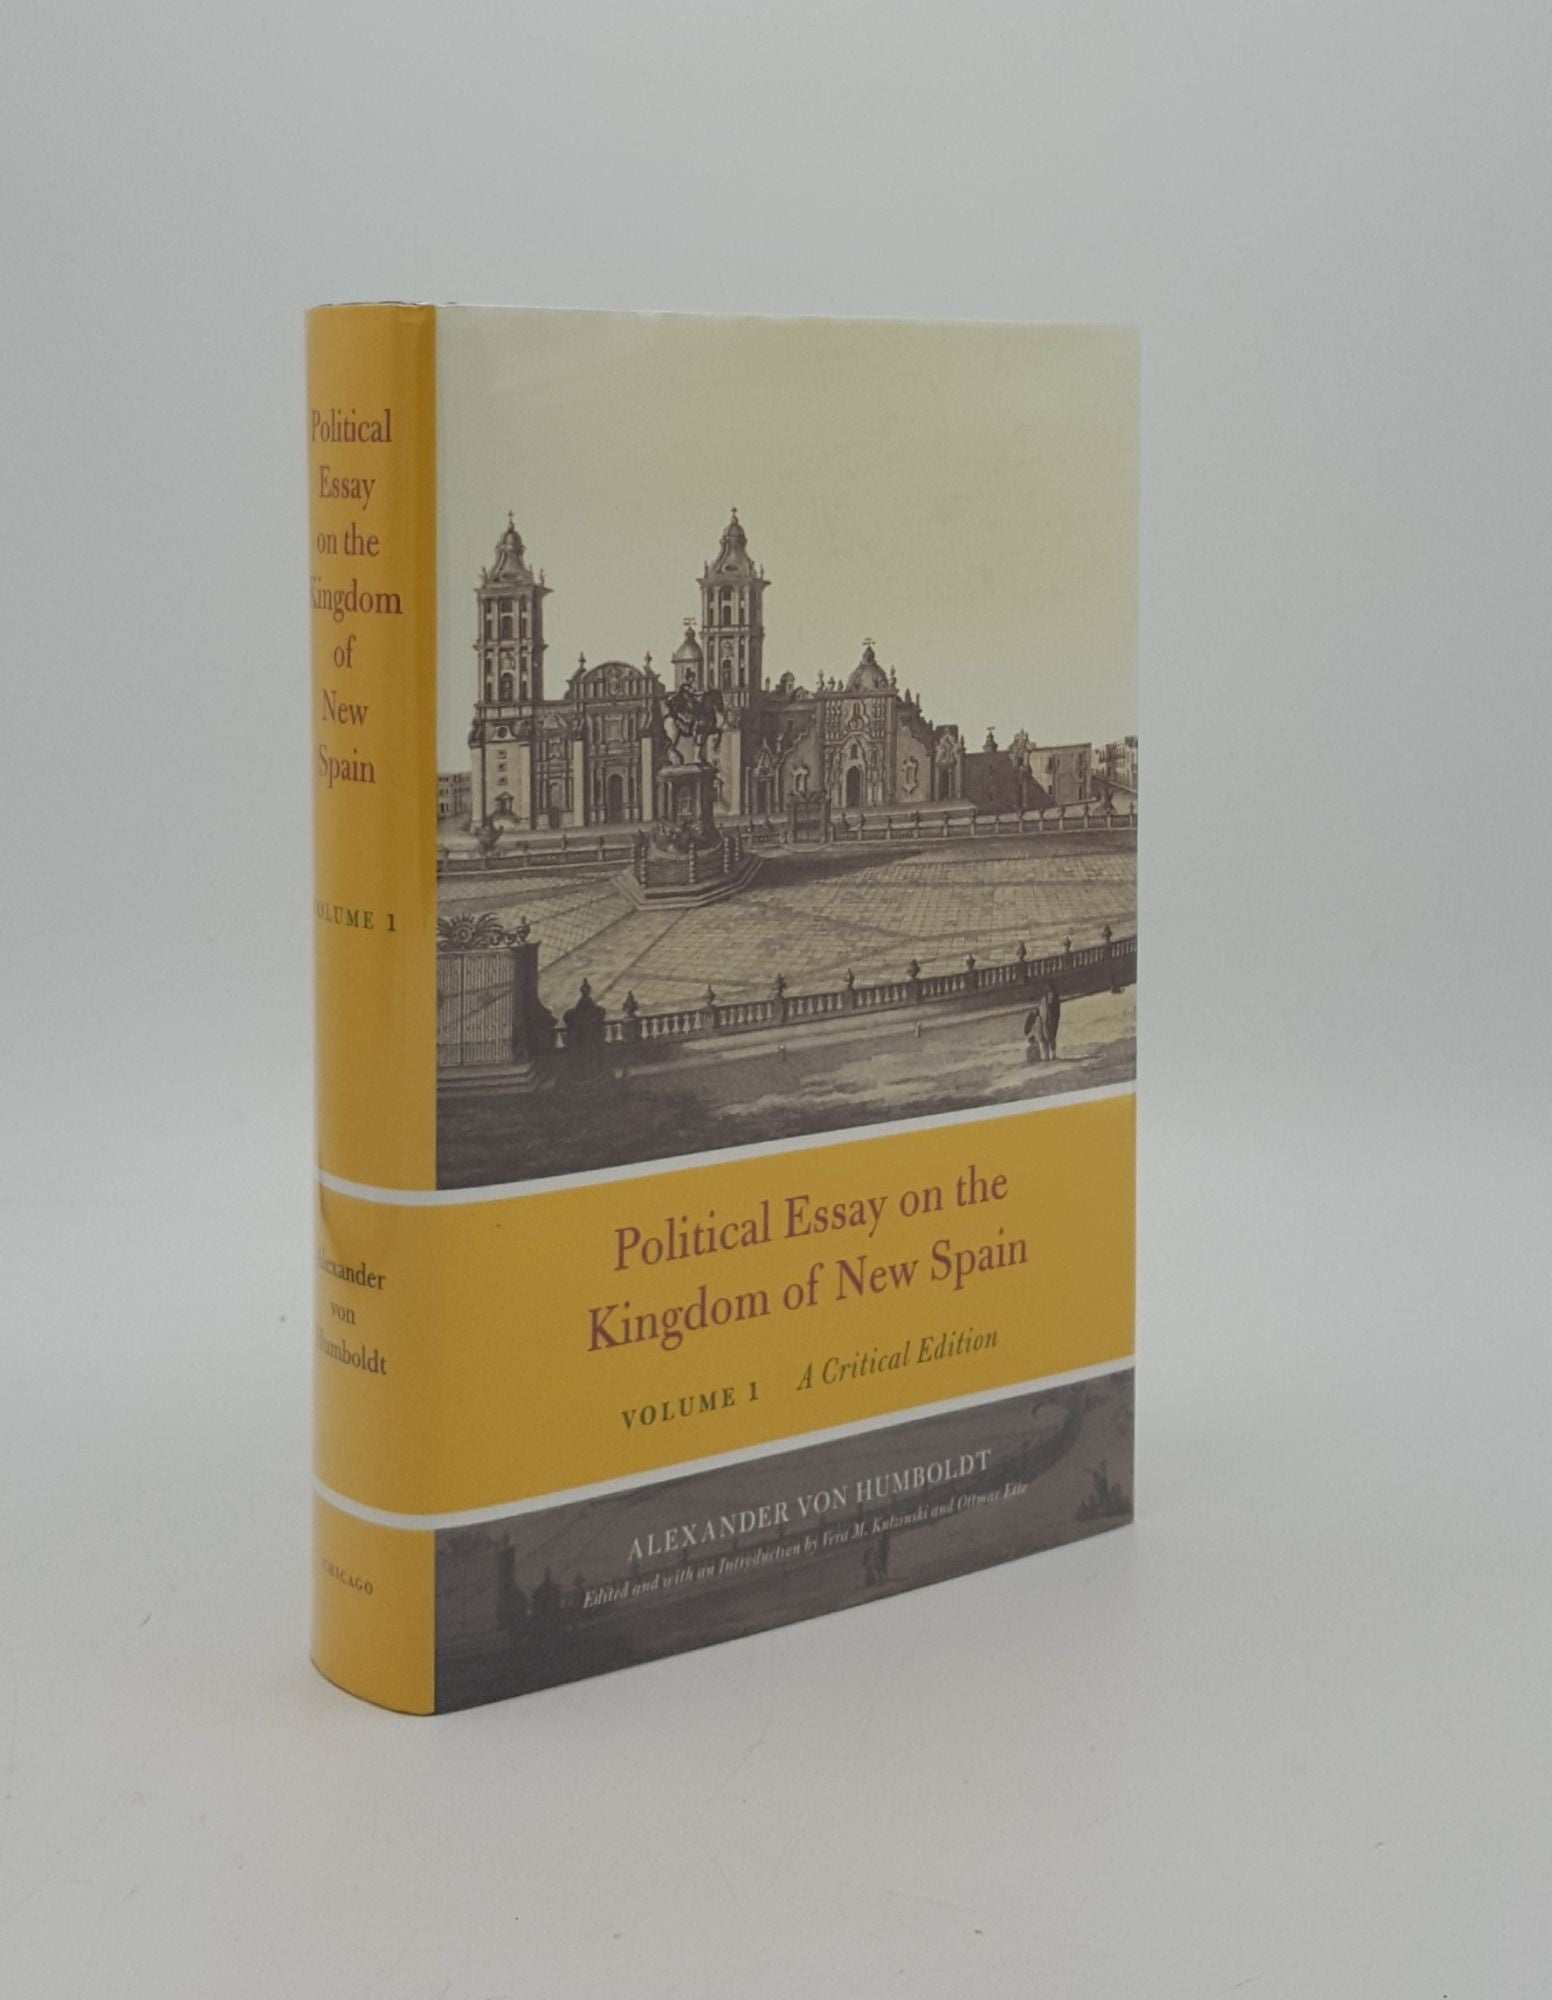 HUMBOLDT von Alexander - Political Essay on the Kingdom of New Spain a Critical Edition Volume 1